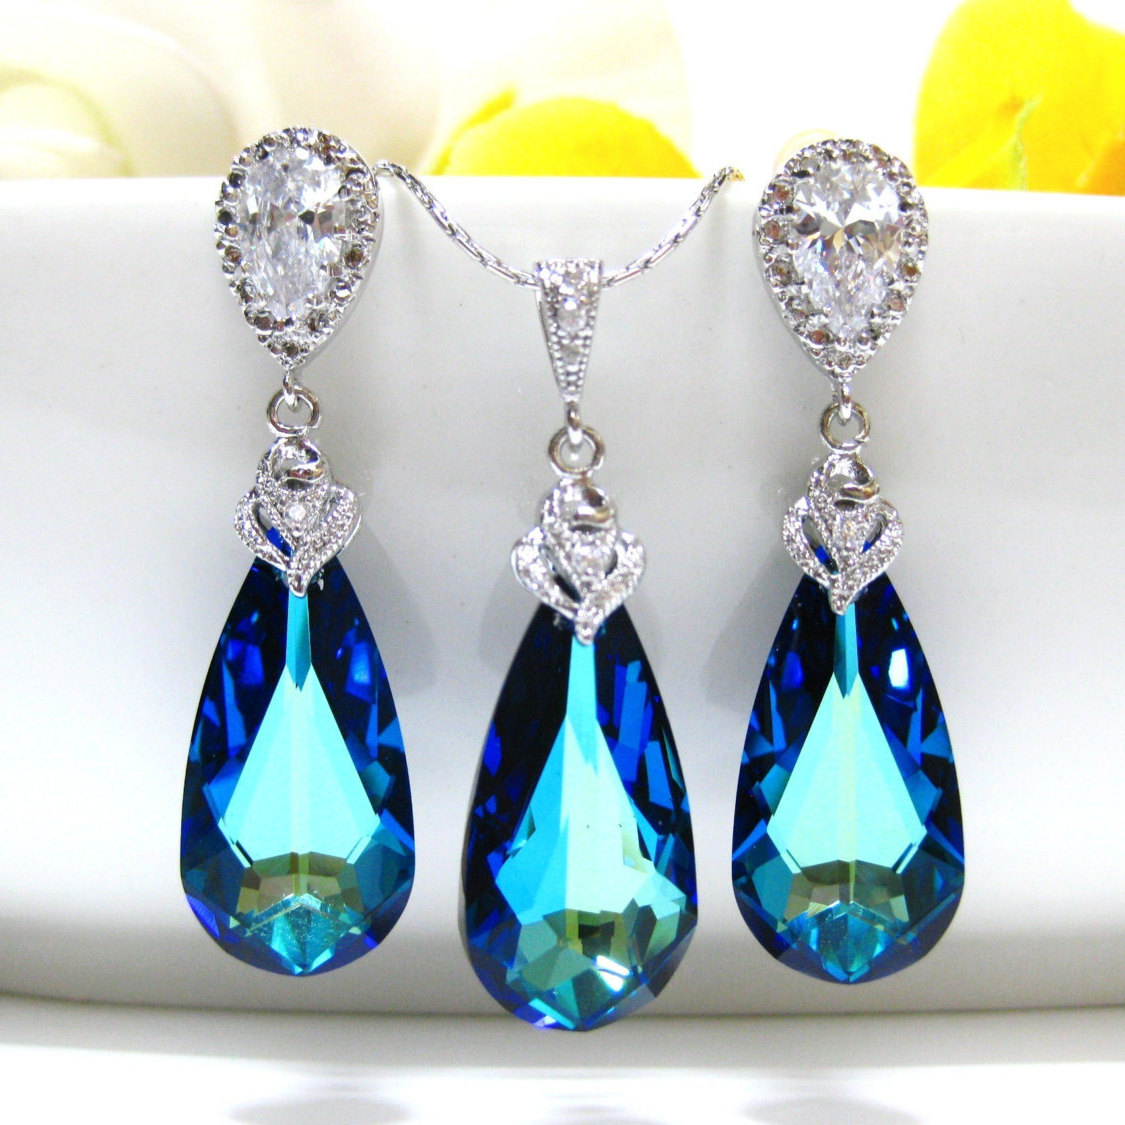 Bermuda Blue Swarovski Teardrop & Earrings Necklace Set Bridal Blue Jewelry Bridesmaid Gift Swarovski Crystal Wedding Jewelry (ne003)